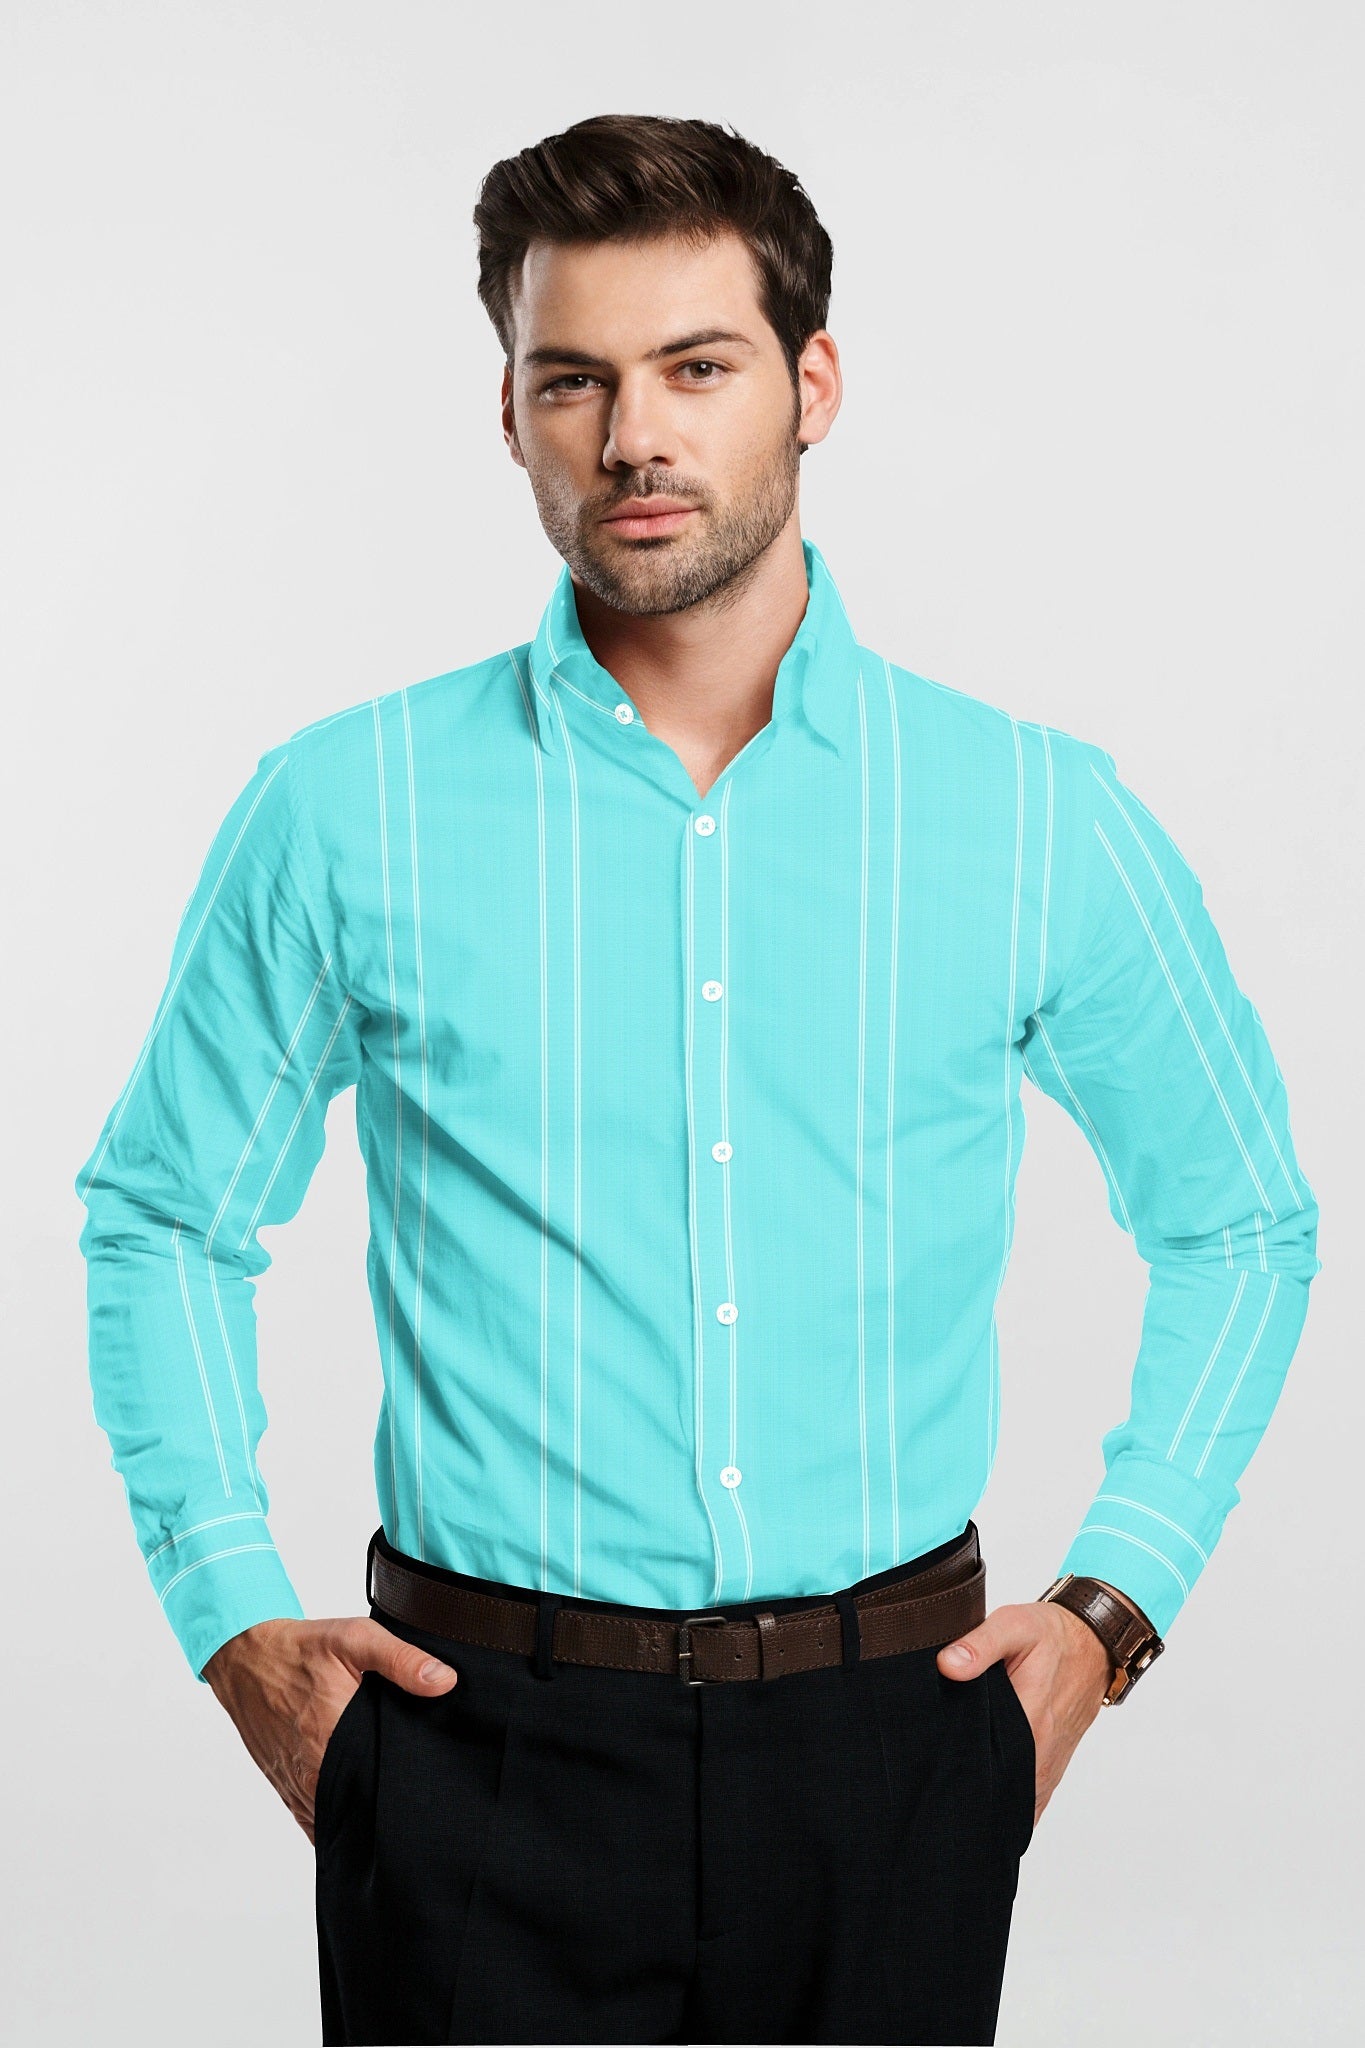 Aruba Blue and White Wide Stripes Cotton Shirt